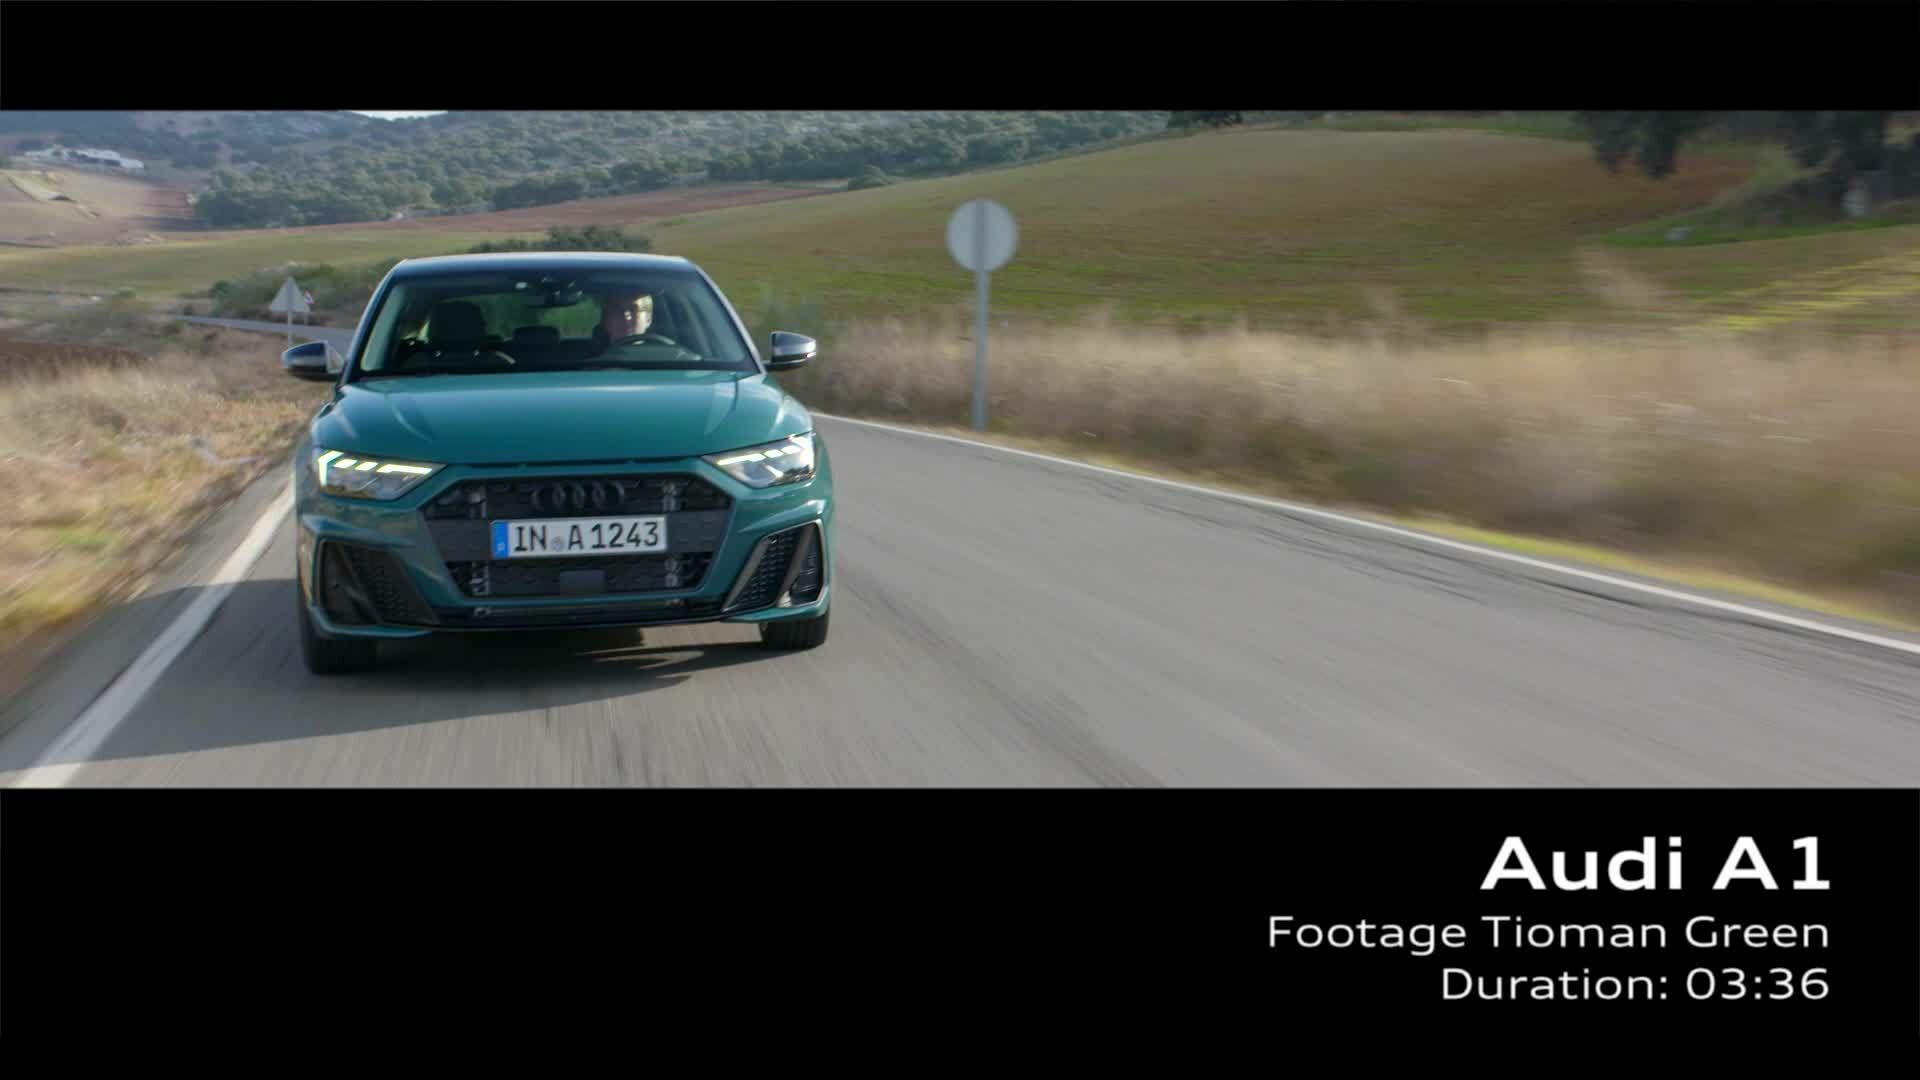 Audi A1 Footage Tioman Green (2018)